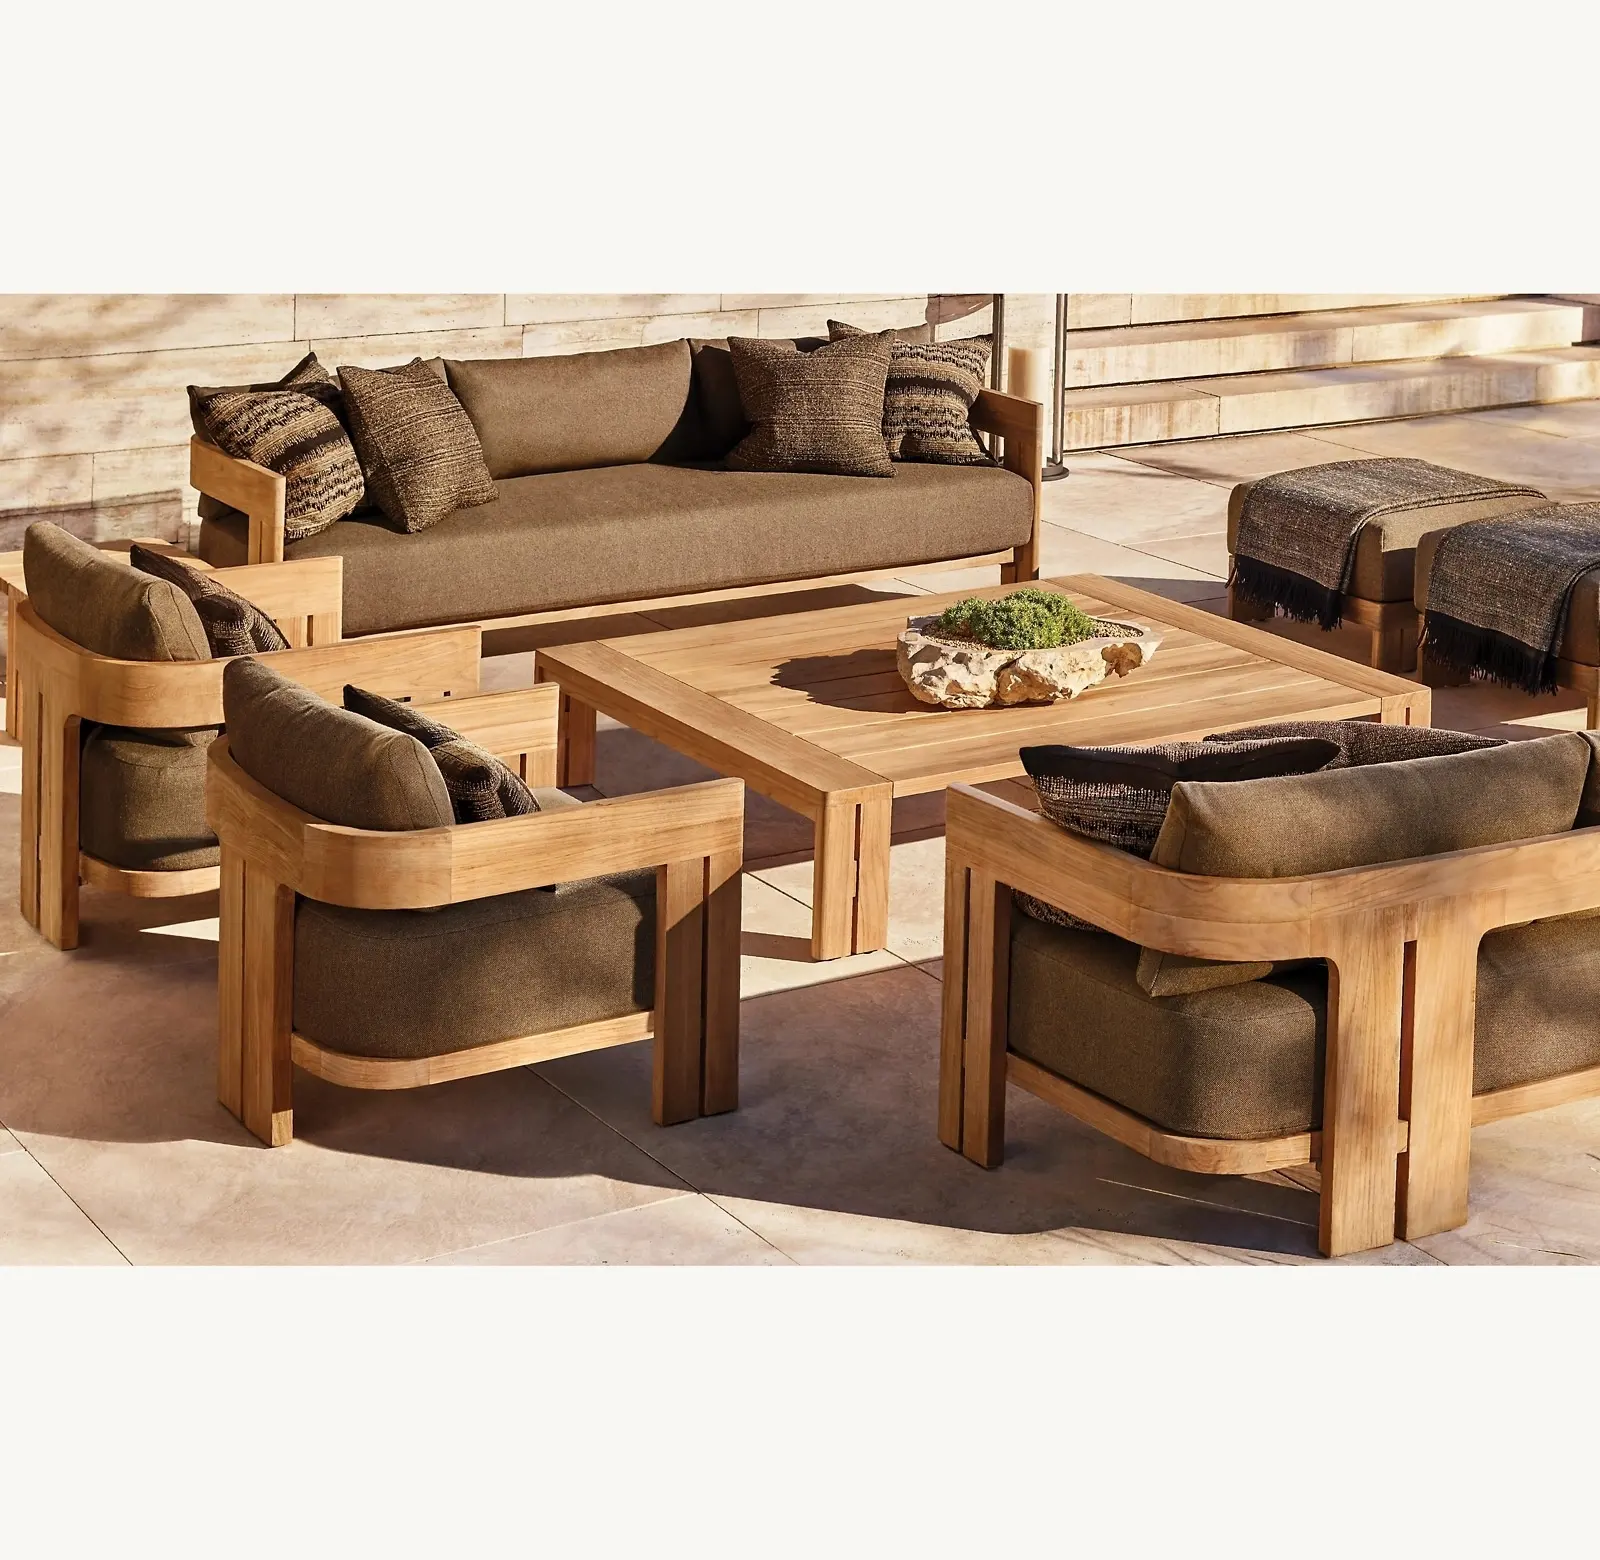 XY Best Outdoor R taburete de bar sillas juego de mesa Garden Villa Silla de ocio-Sofá de teca moderno para terraza de Hotel al aire libre